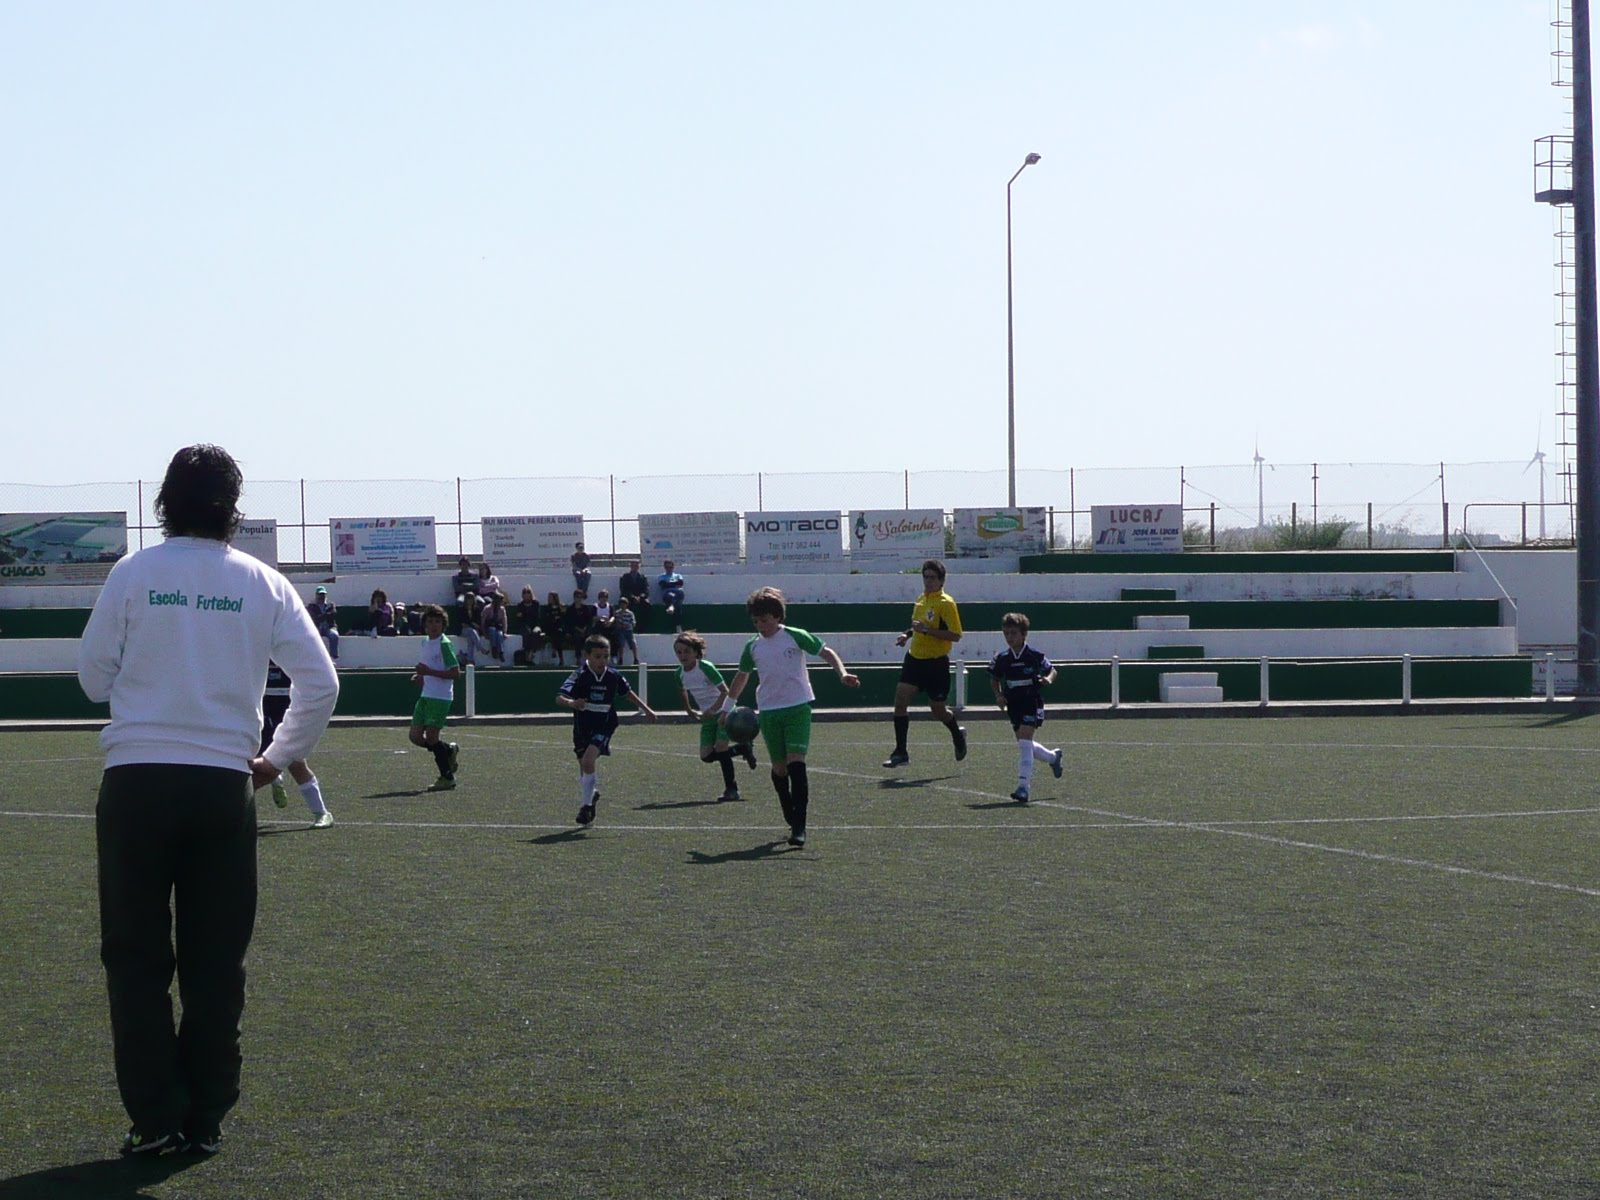 Princípios de Jogo - Escola Futebol Sporting Clube Encarnacense